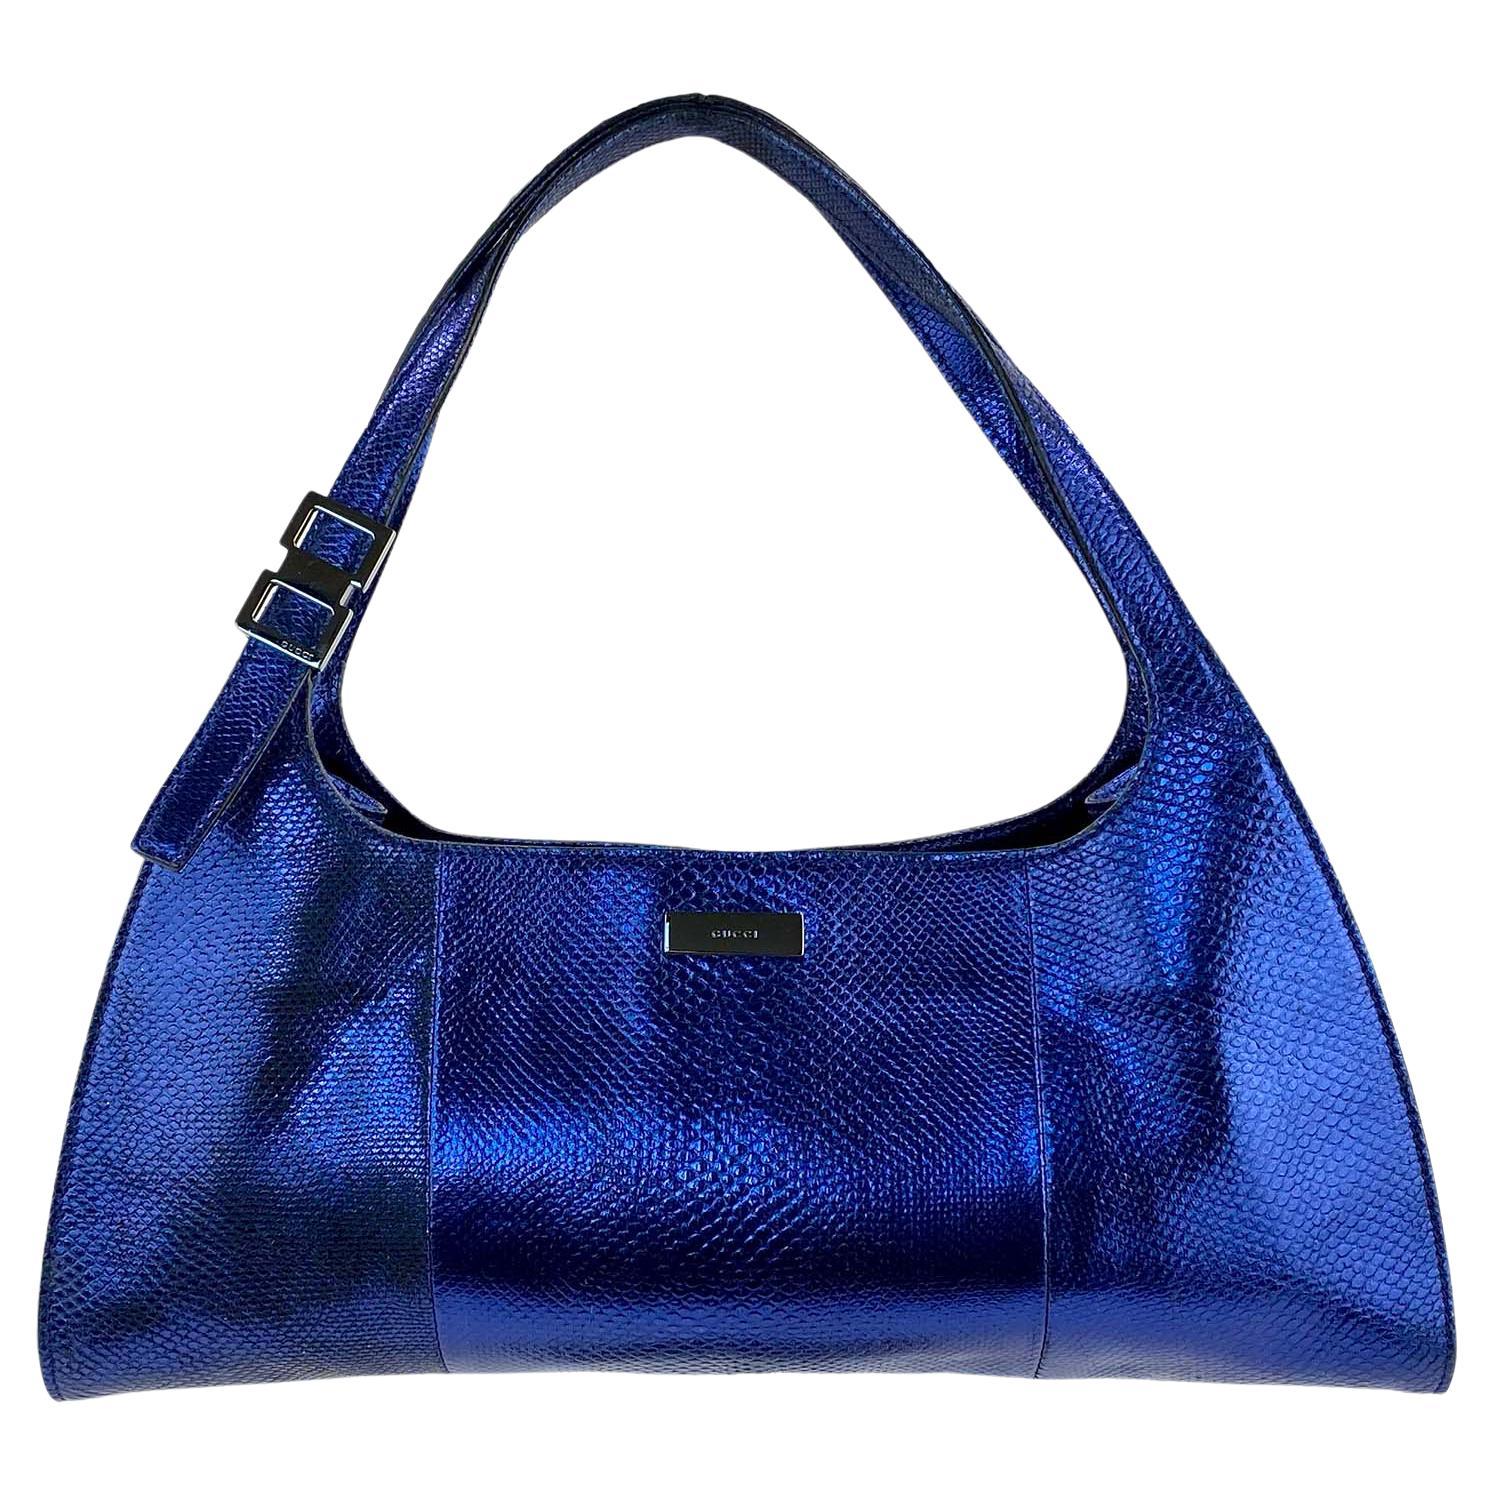 S/S 2001 Gucci by Tom Ford Metallic Blue Lizard Bag